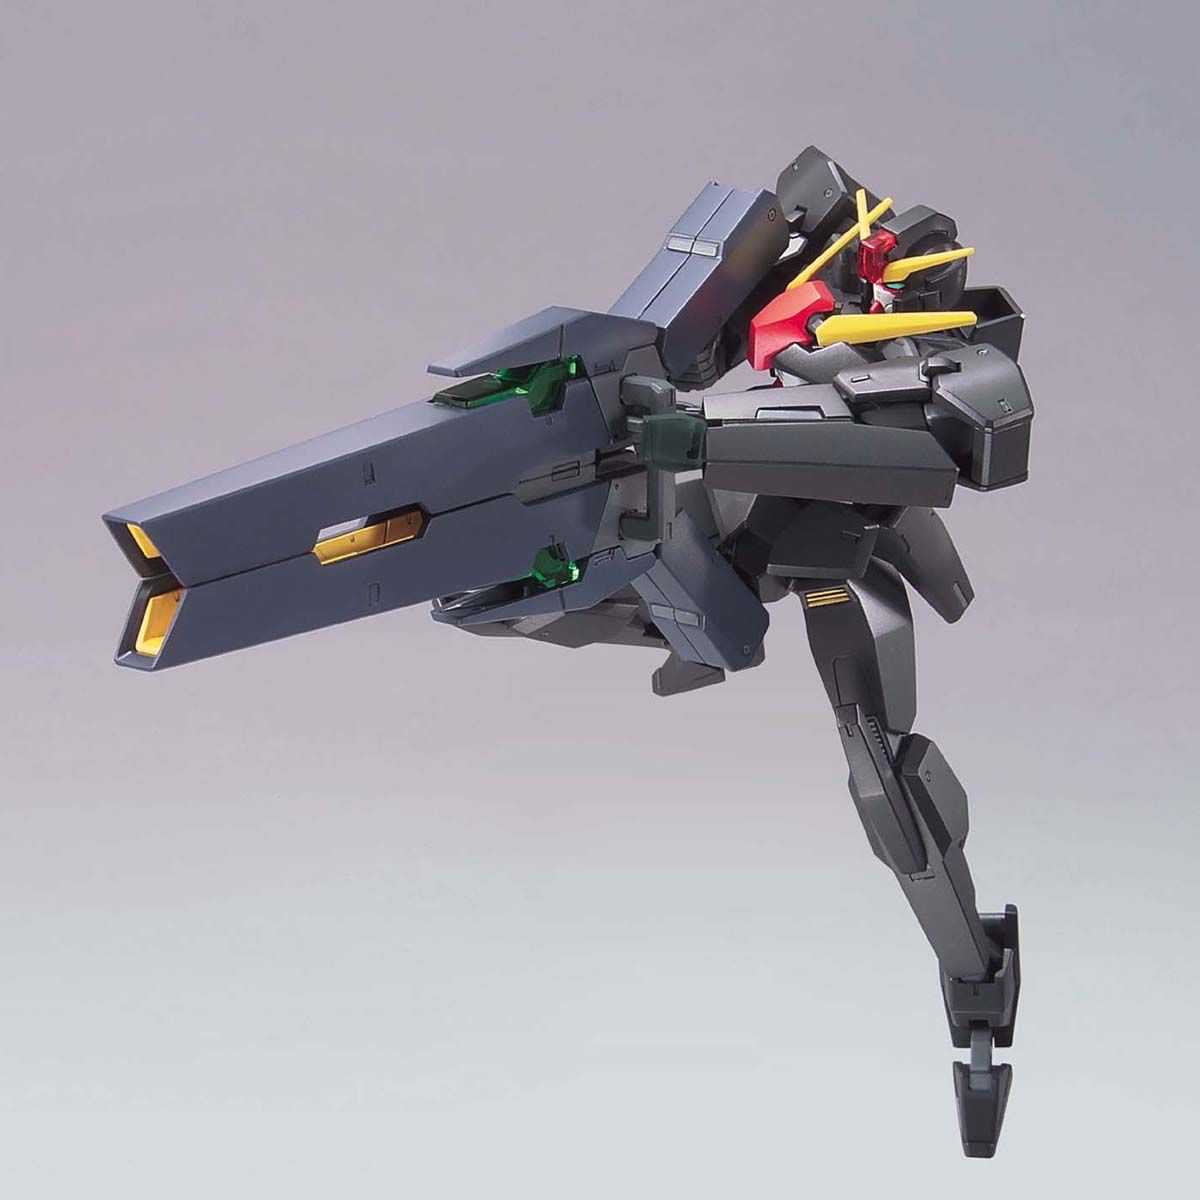 HG00 1/144 No.37 GN-009 Seraphim Gundam